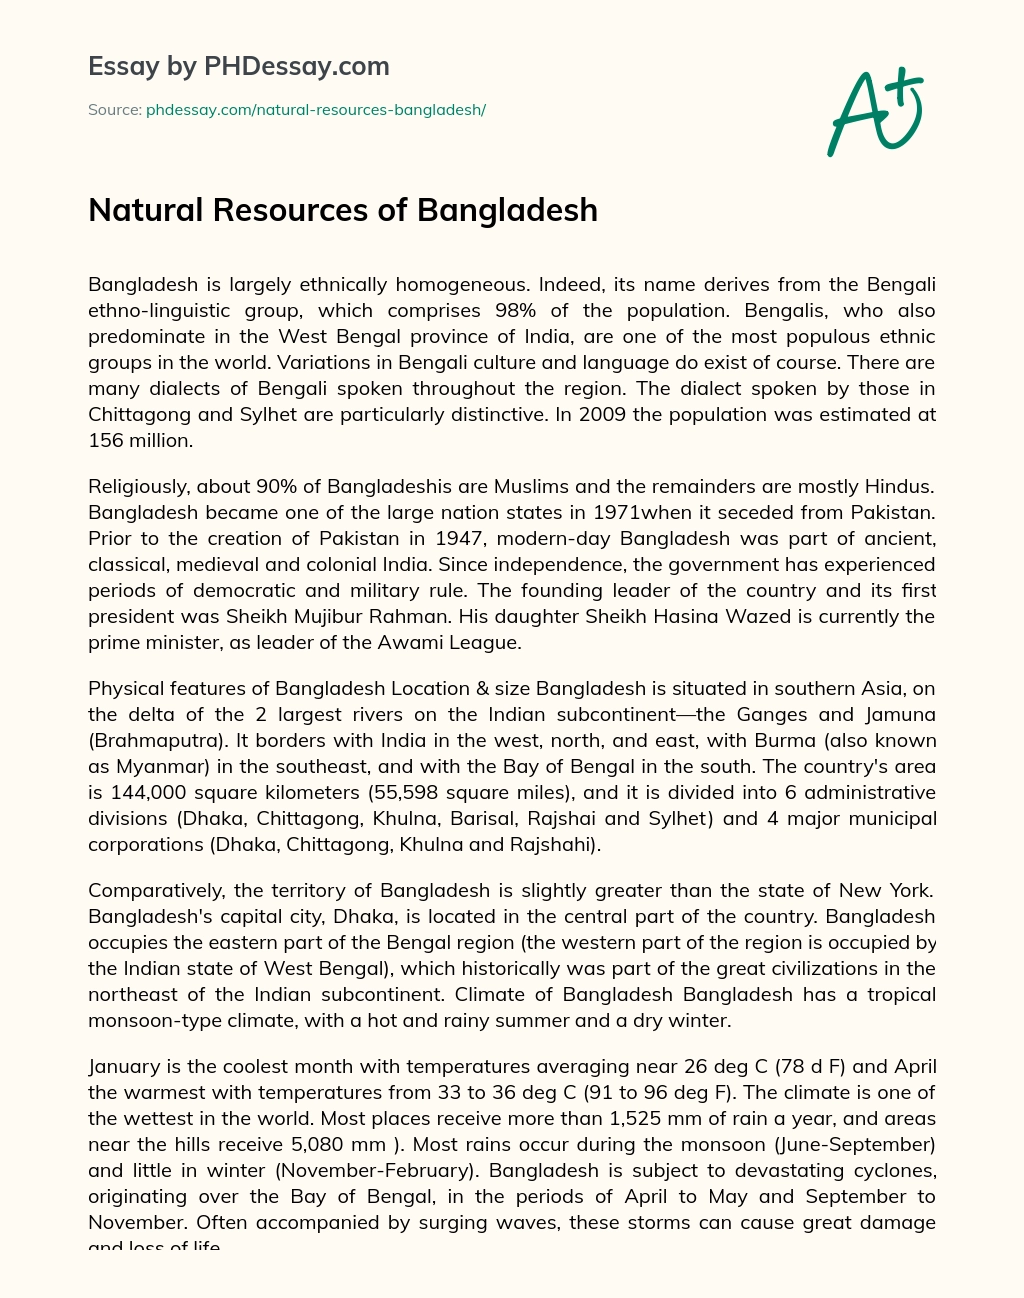 Natural Resources of Bangladesh essay